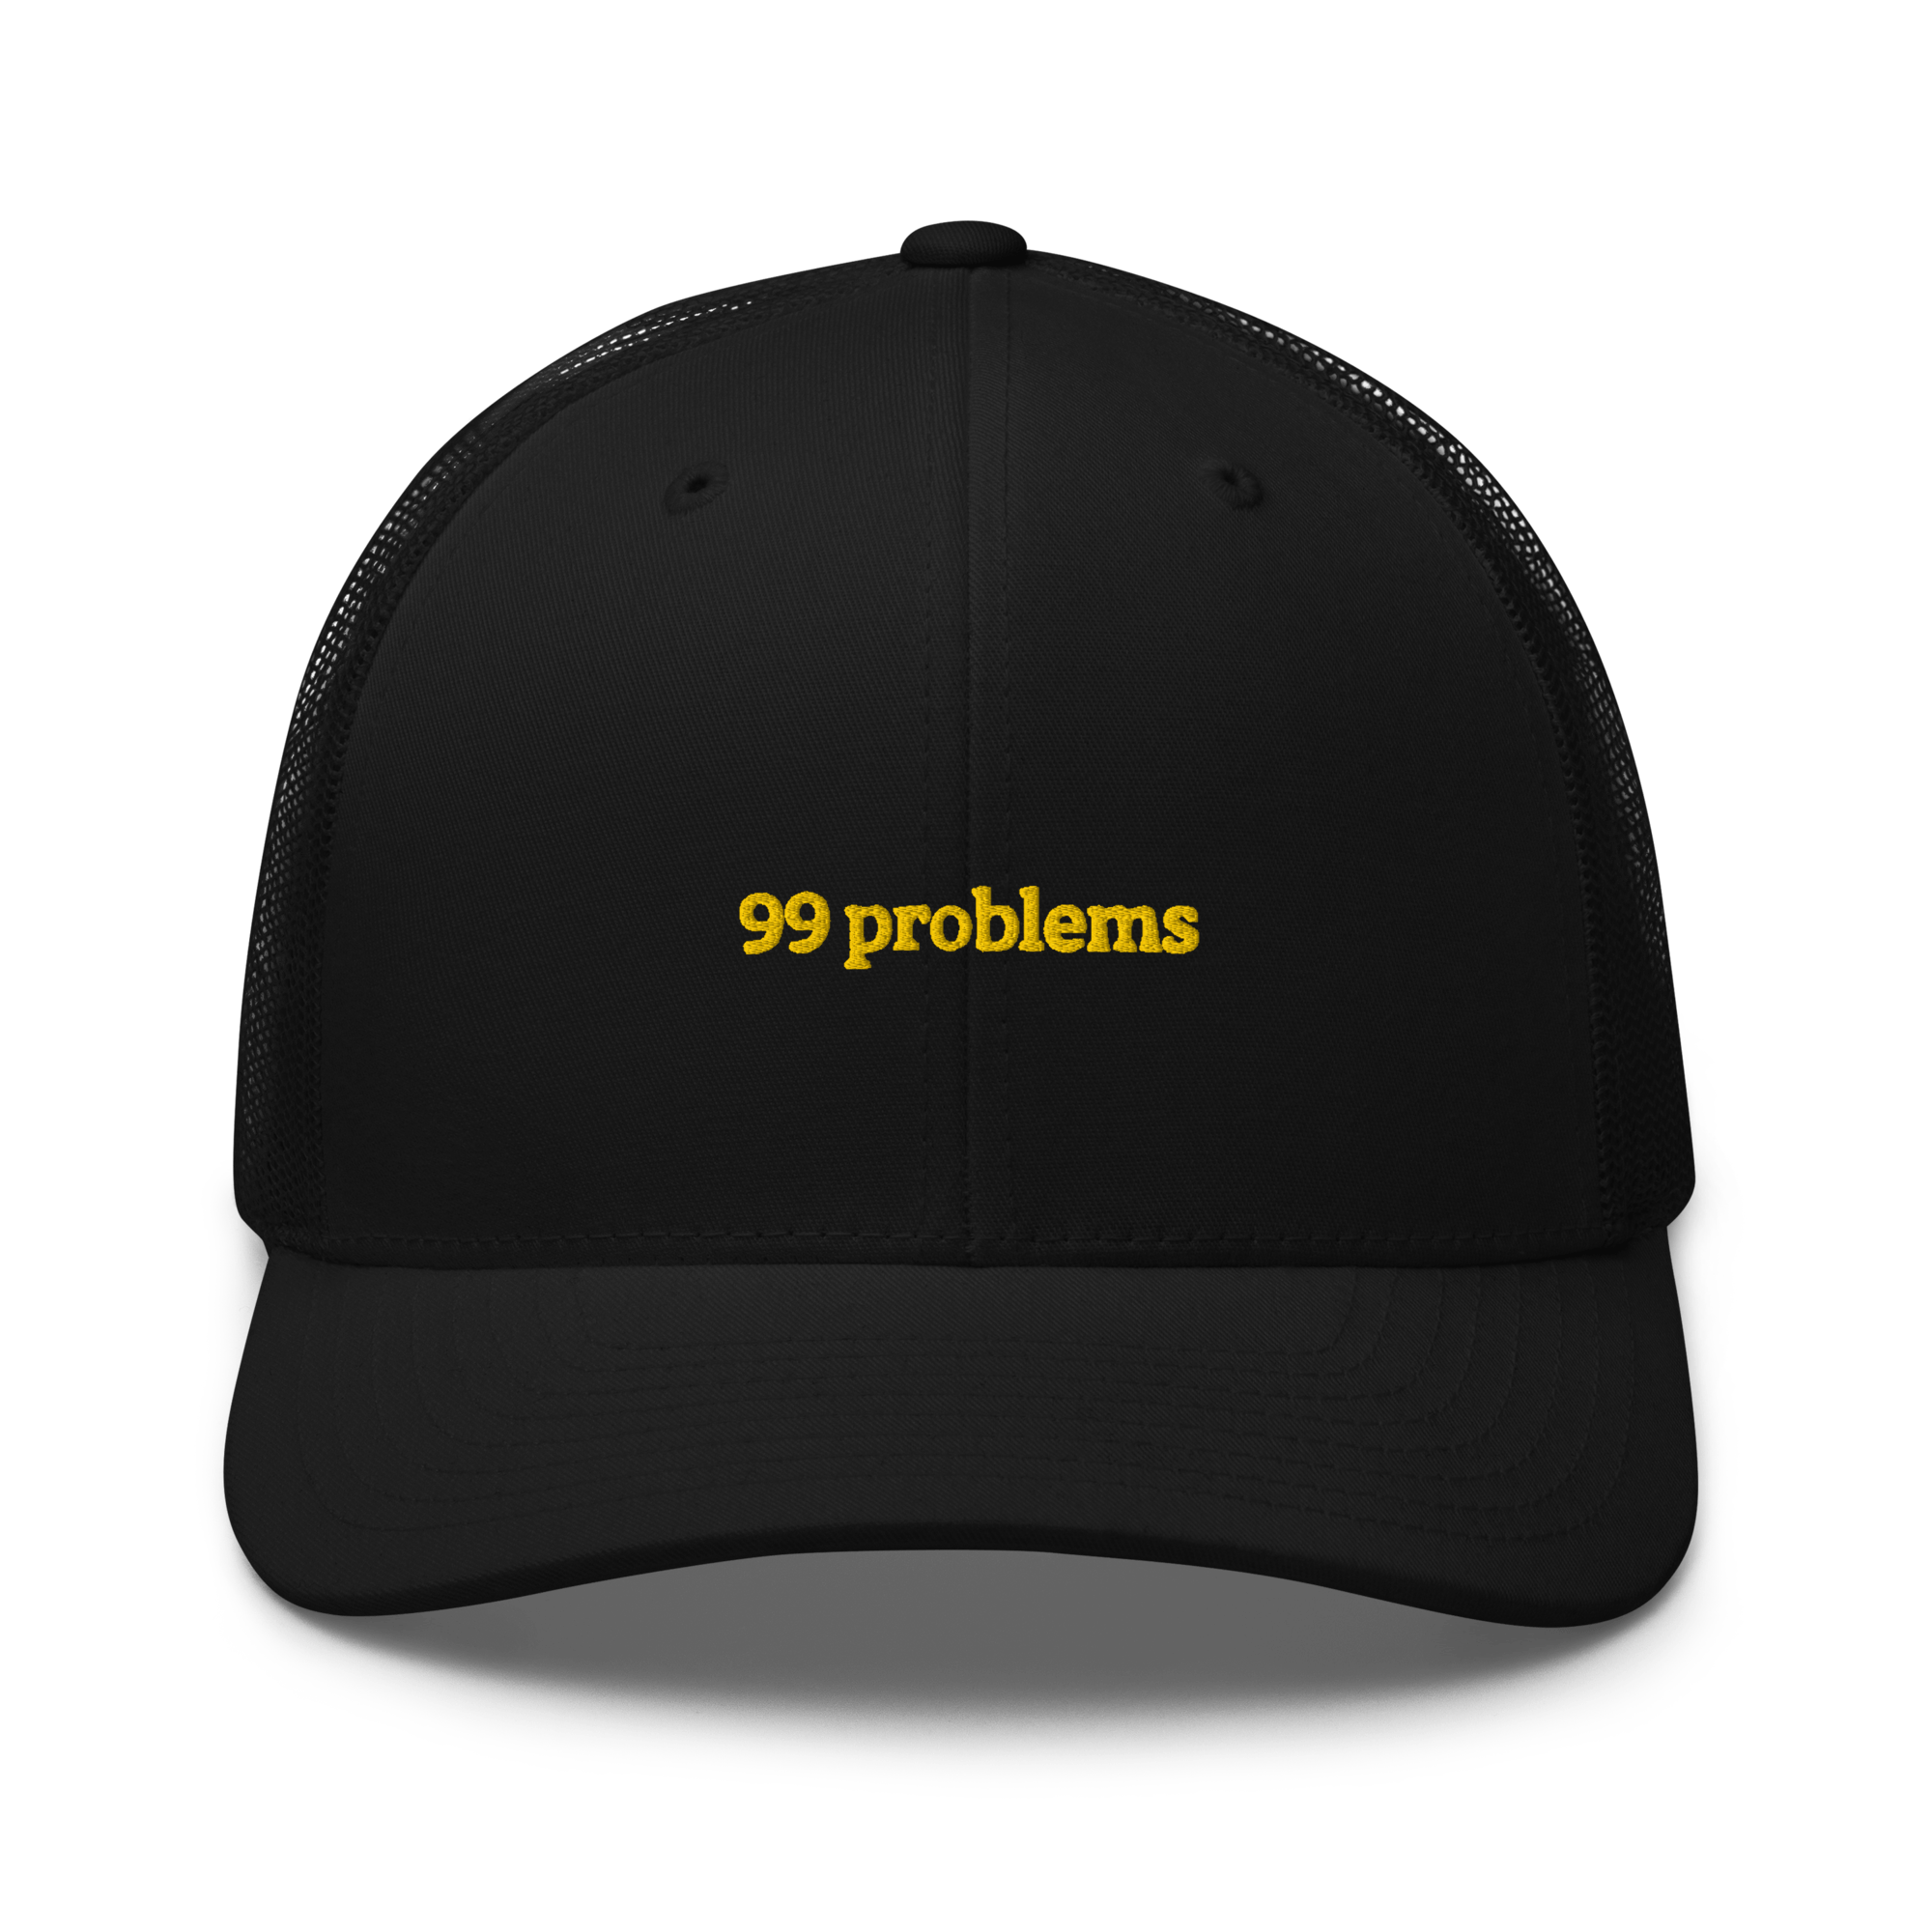 99 problems Trucker Cap, Black